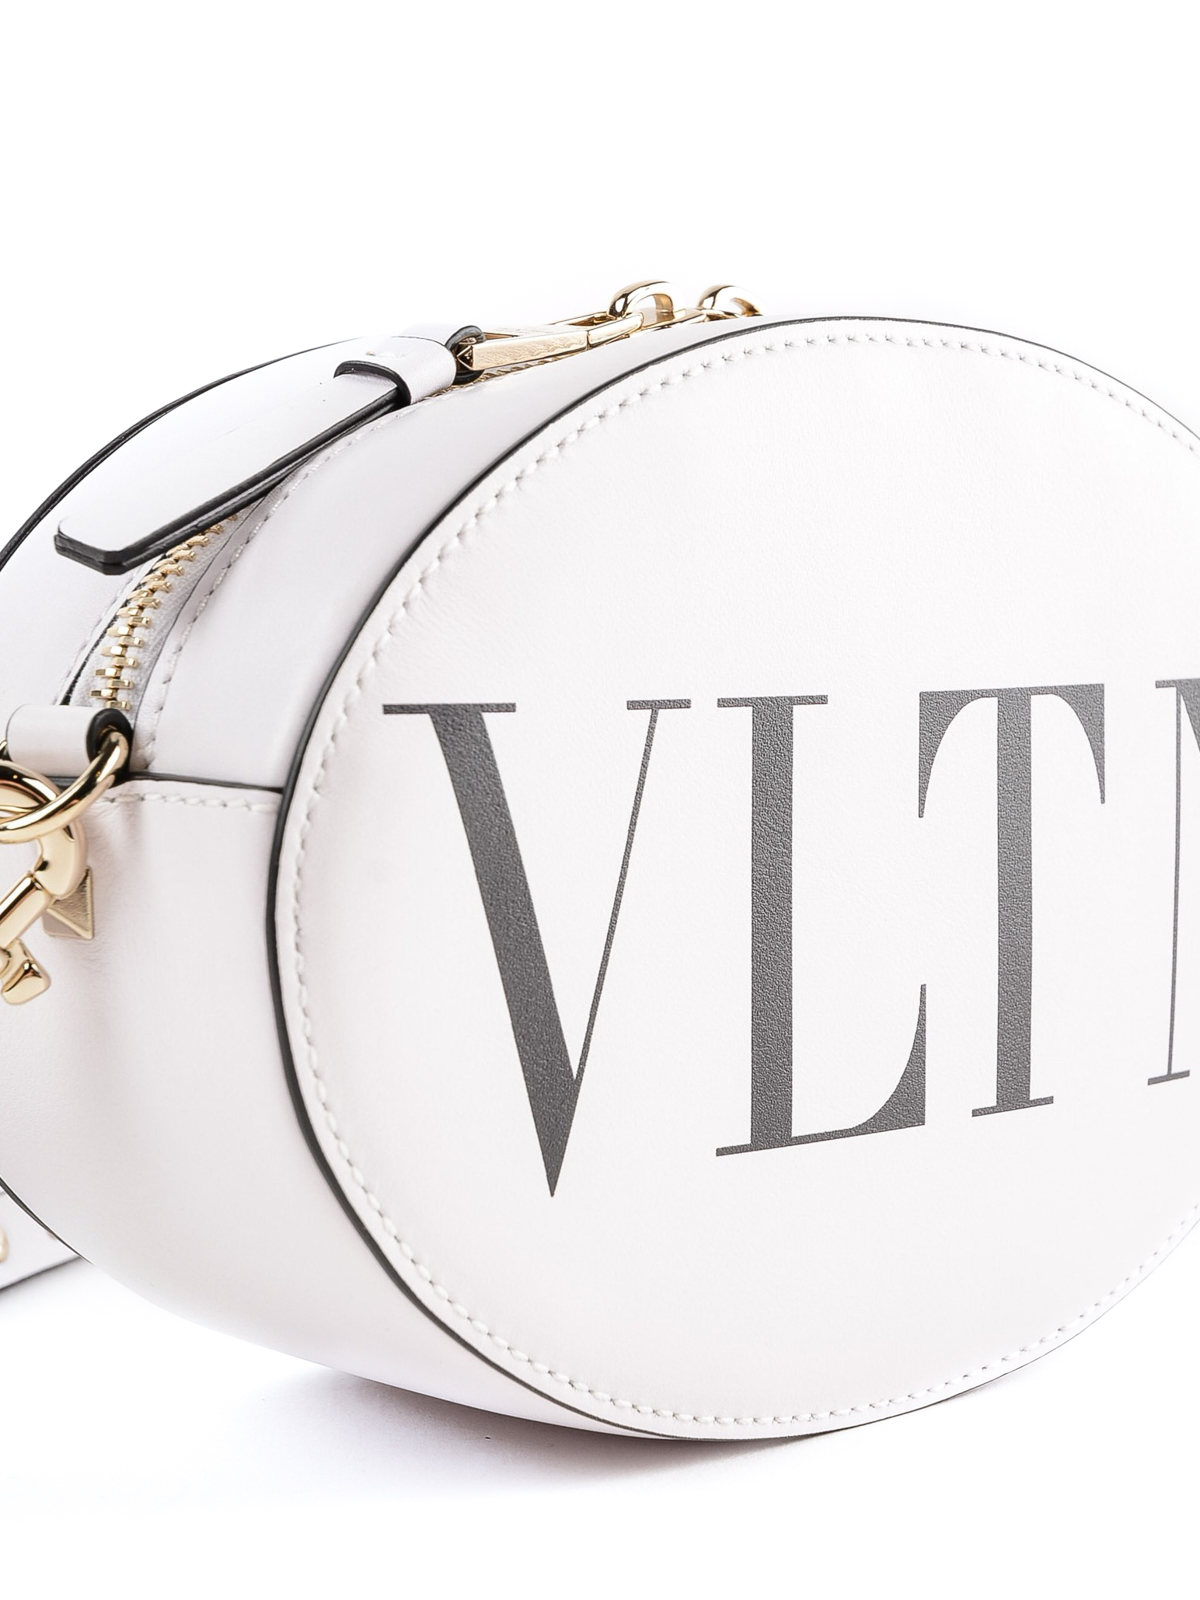 Valentino VLTN Crossbody Bag White - NOBLEMARS